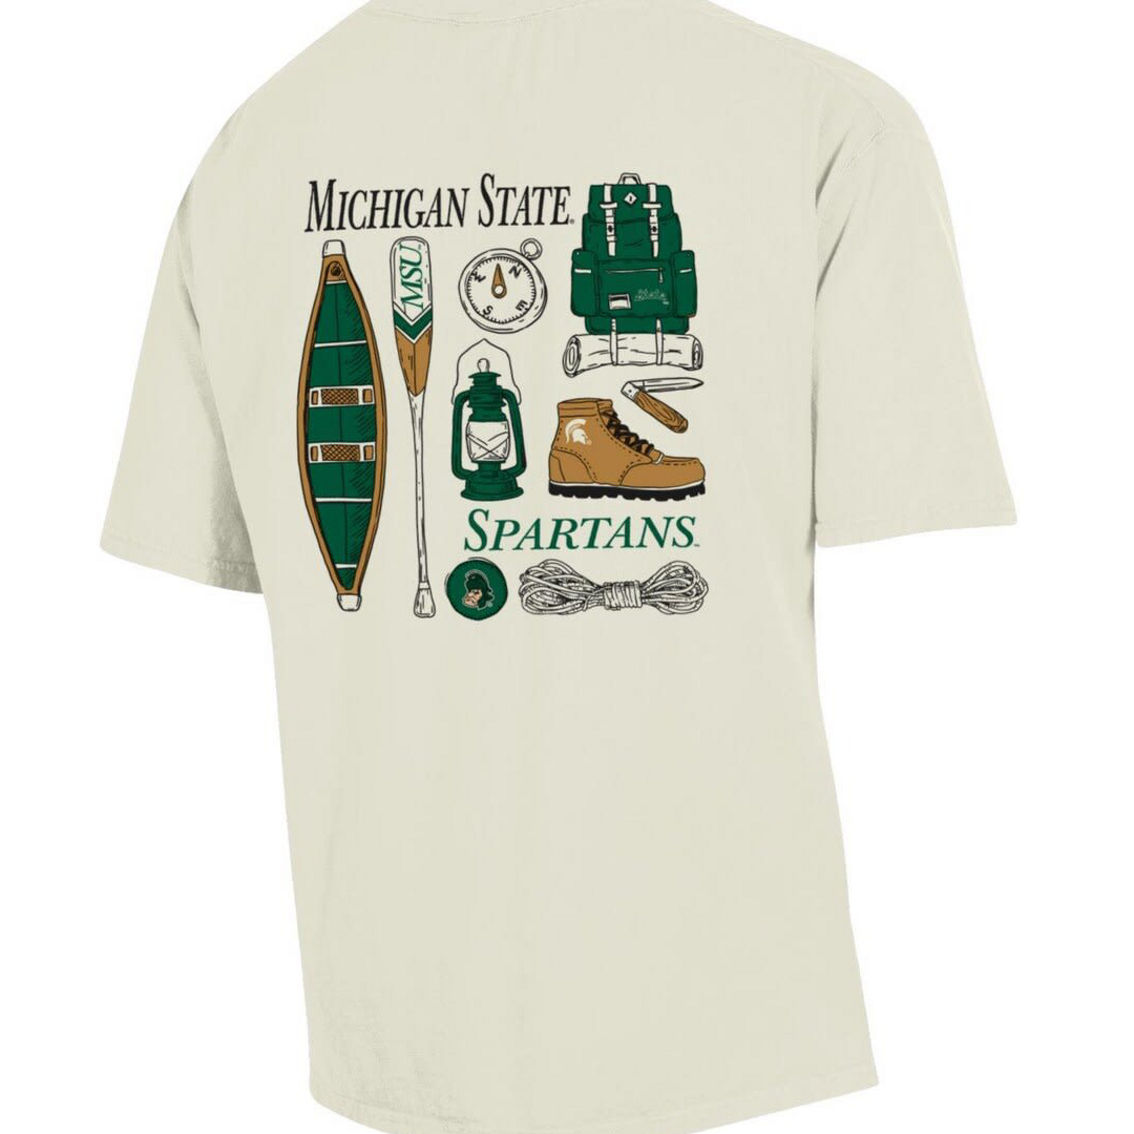 Comfort Wash Men's Comfort Wash Cream Michigan State Spartans Camping Trip T-Shirt - Image 4 of 4